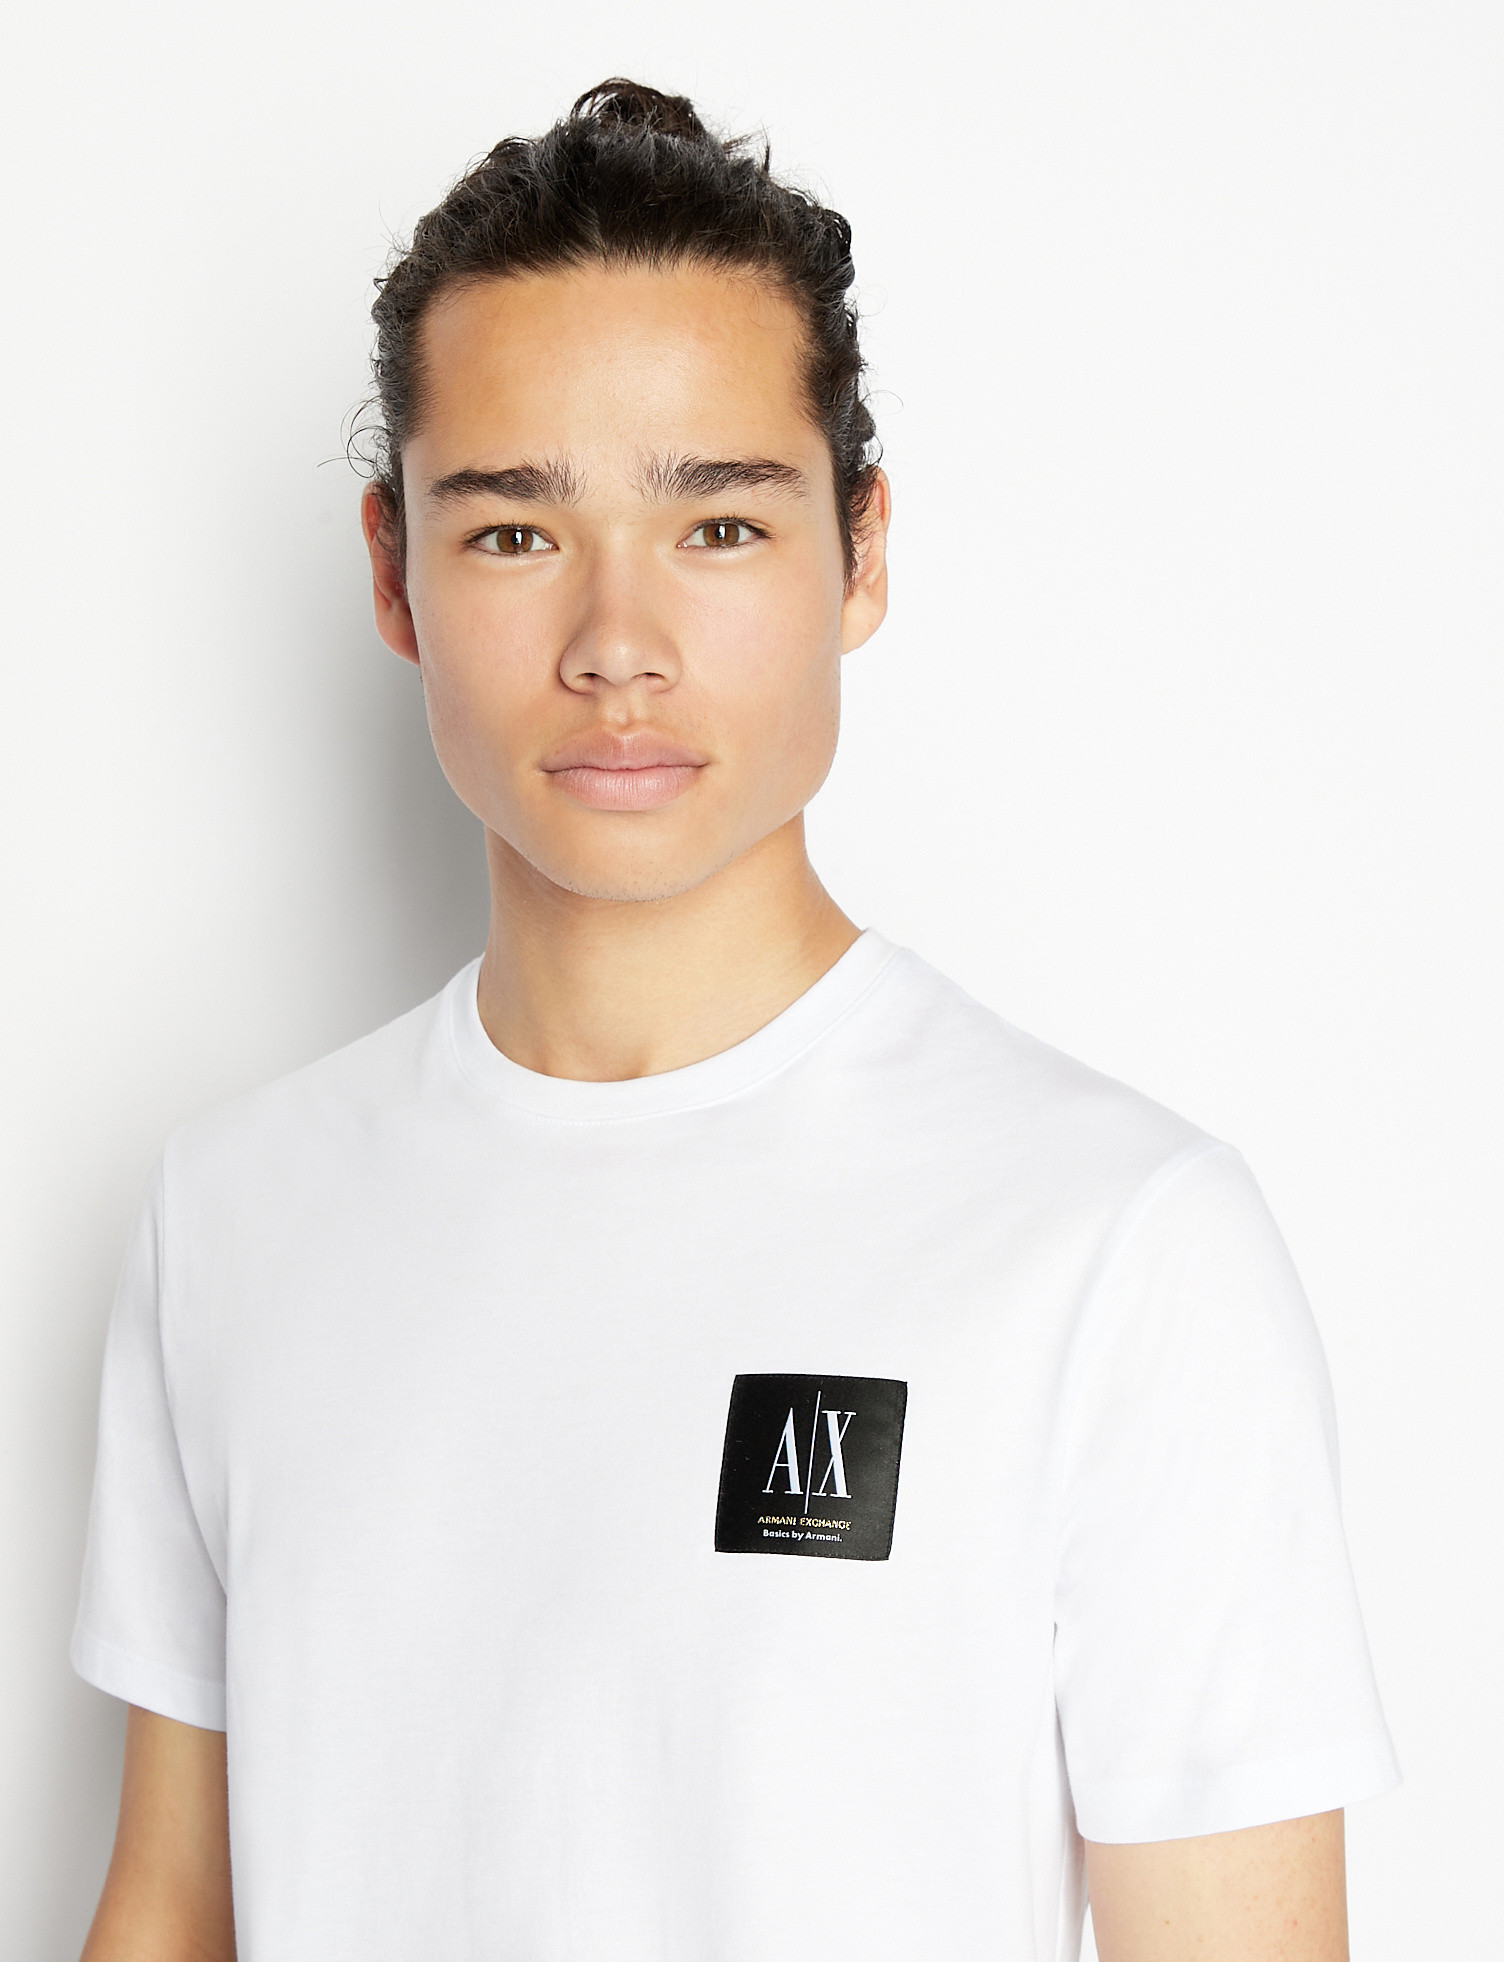 Armani Exchange - T-shirt regular fit in cotone organico con logo, Bianco, large image number 5